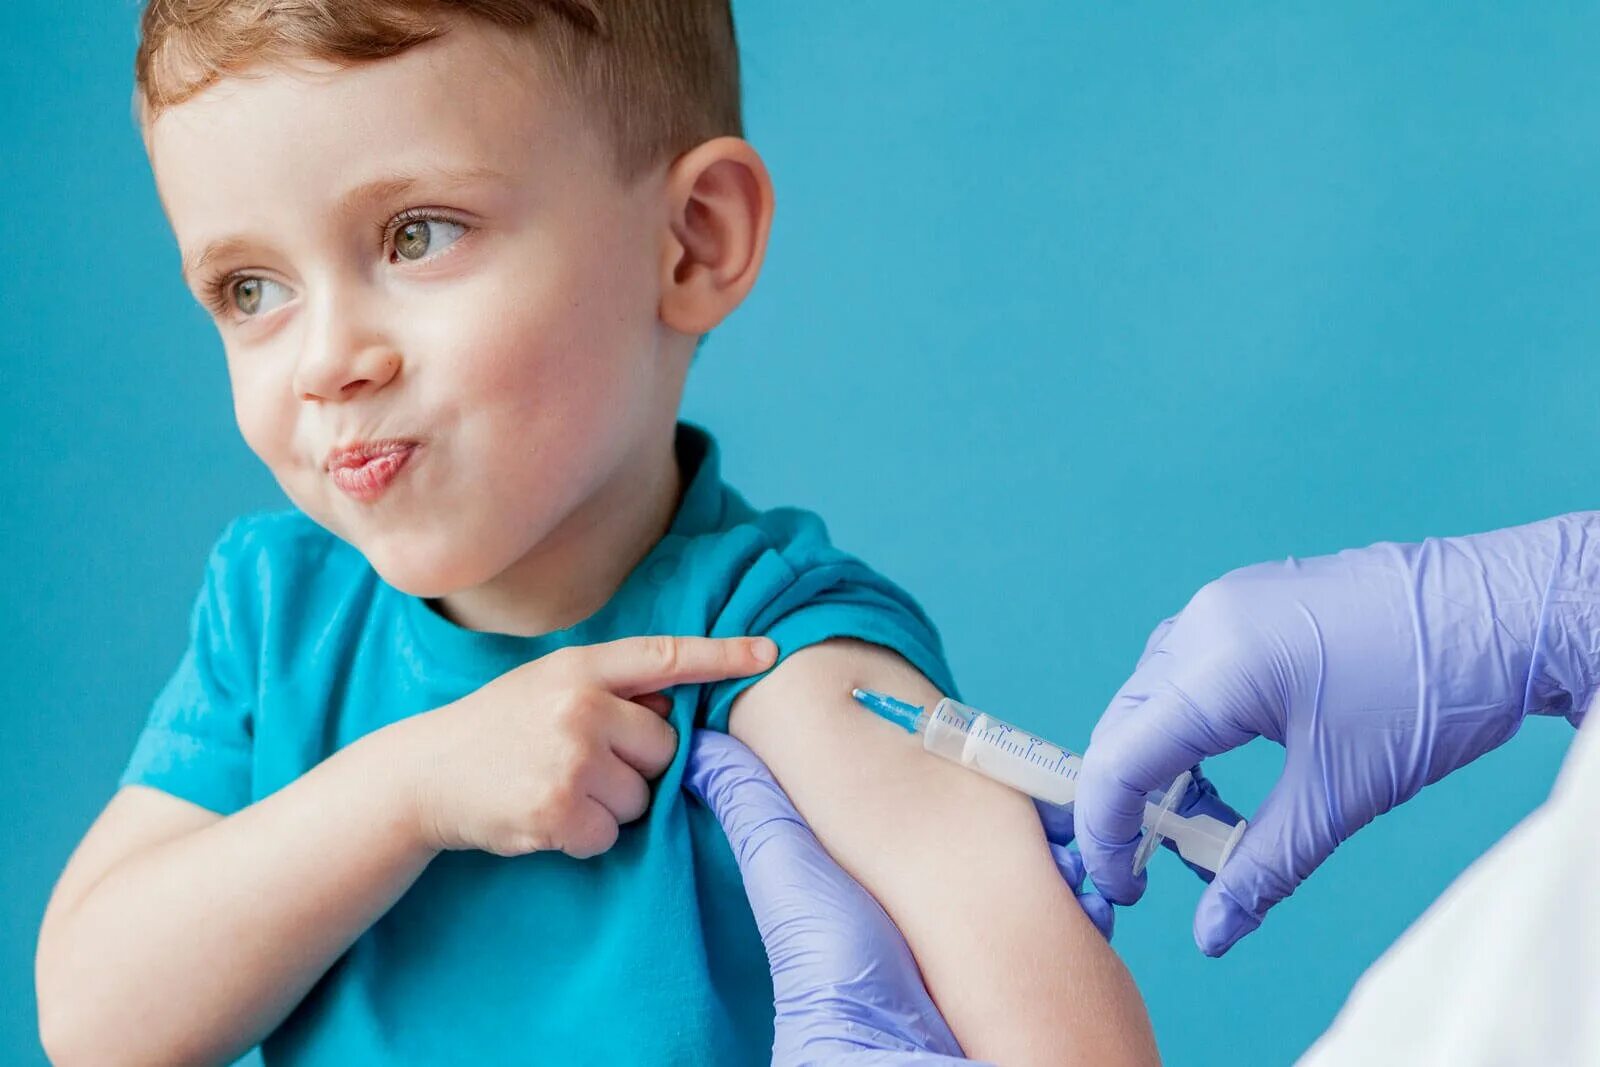 Ковид можно делать прививки. Вакцинация детей от Covid-19. Прививка детям. Иммунизация детей. Вакцинопрофилактика у детей.